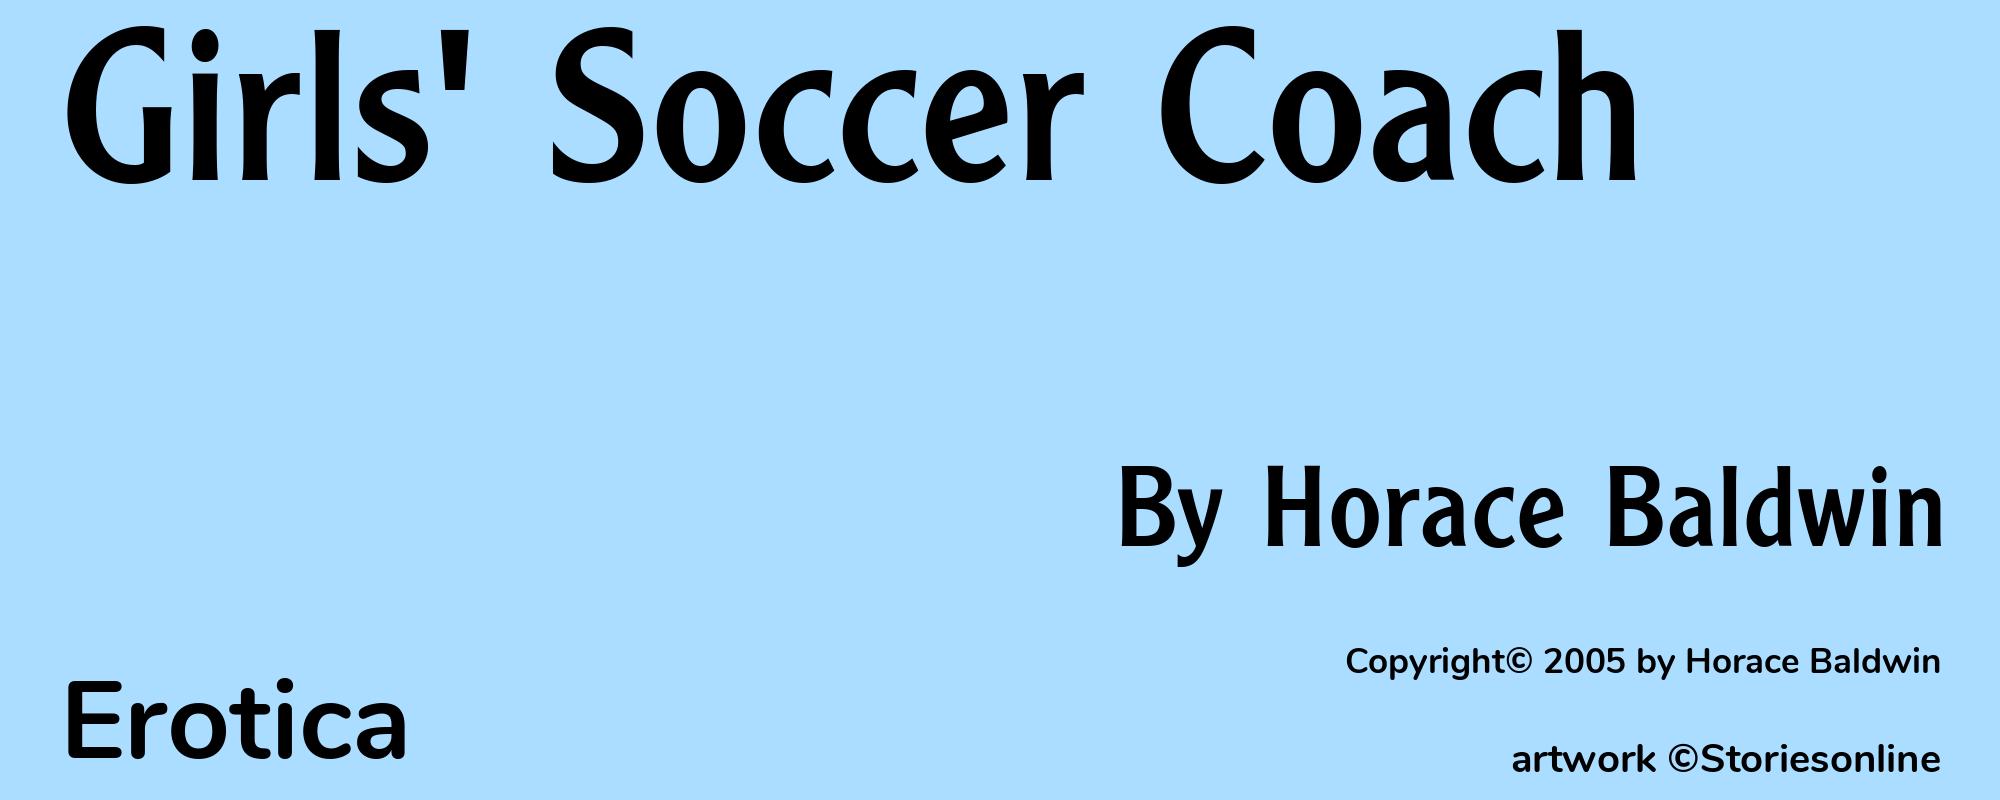 Girls' Soccer Coach - Cover